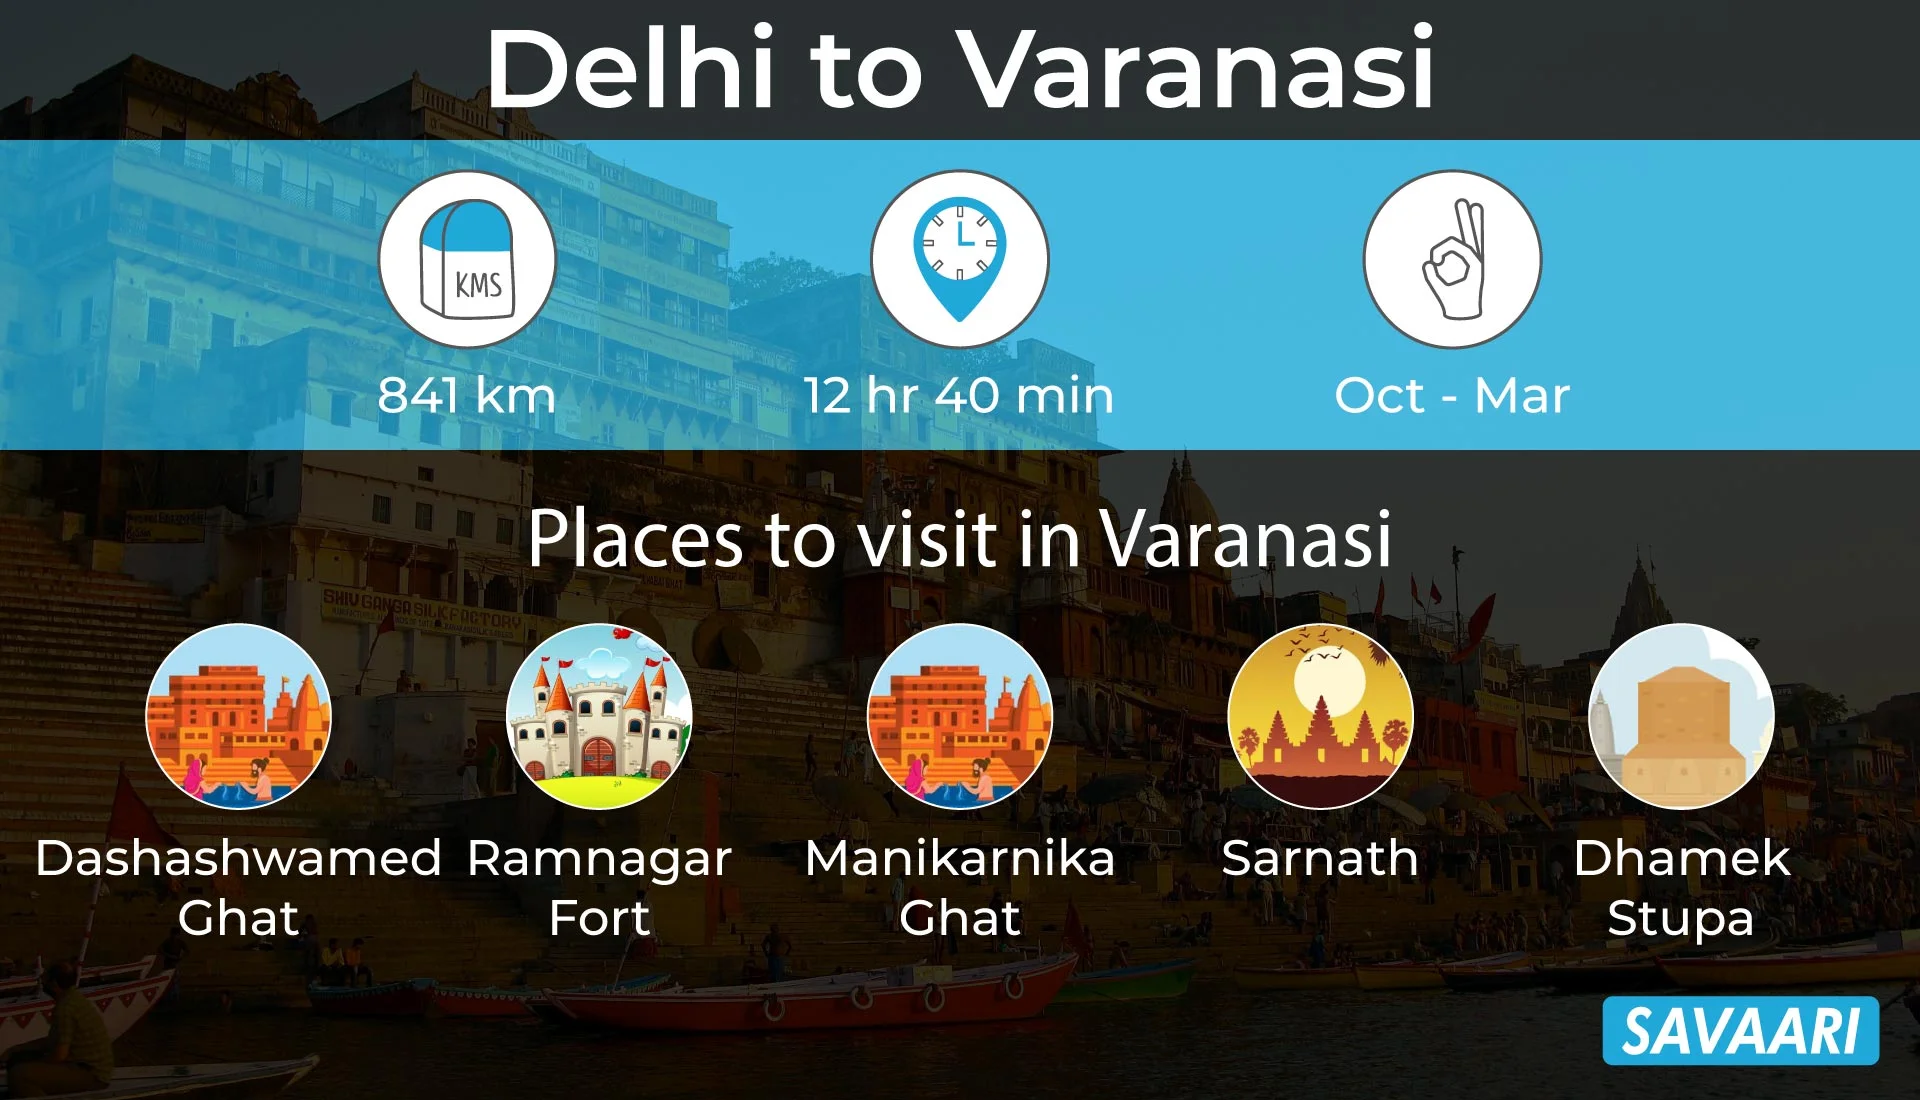 Delhi to Varanasi by road